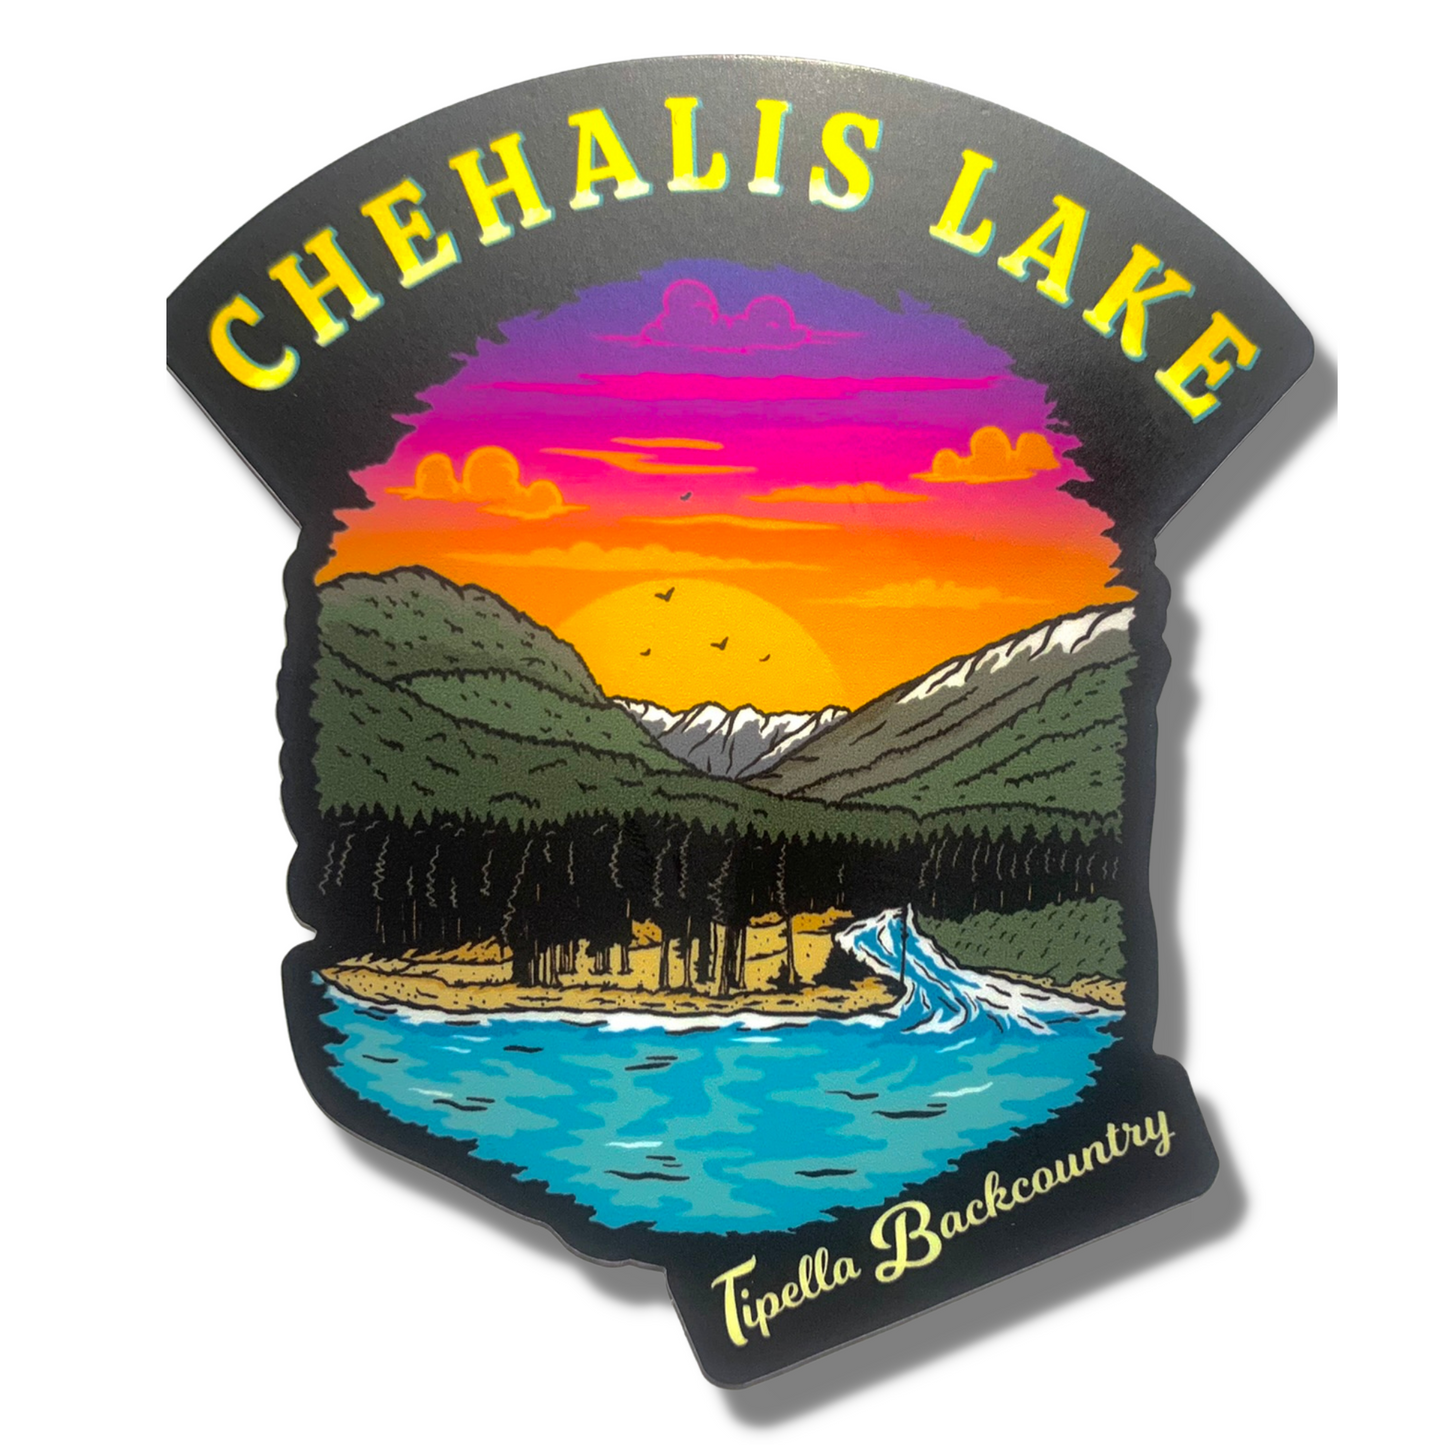 Die Cut Destination Sticker - CHEHALIS LAKE, BC